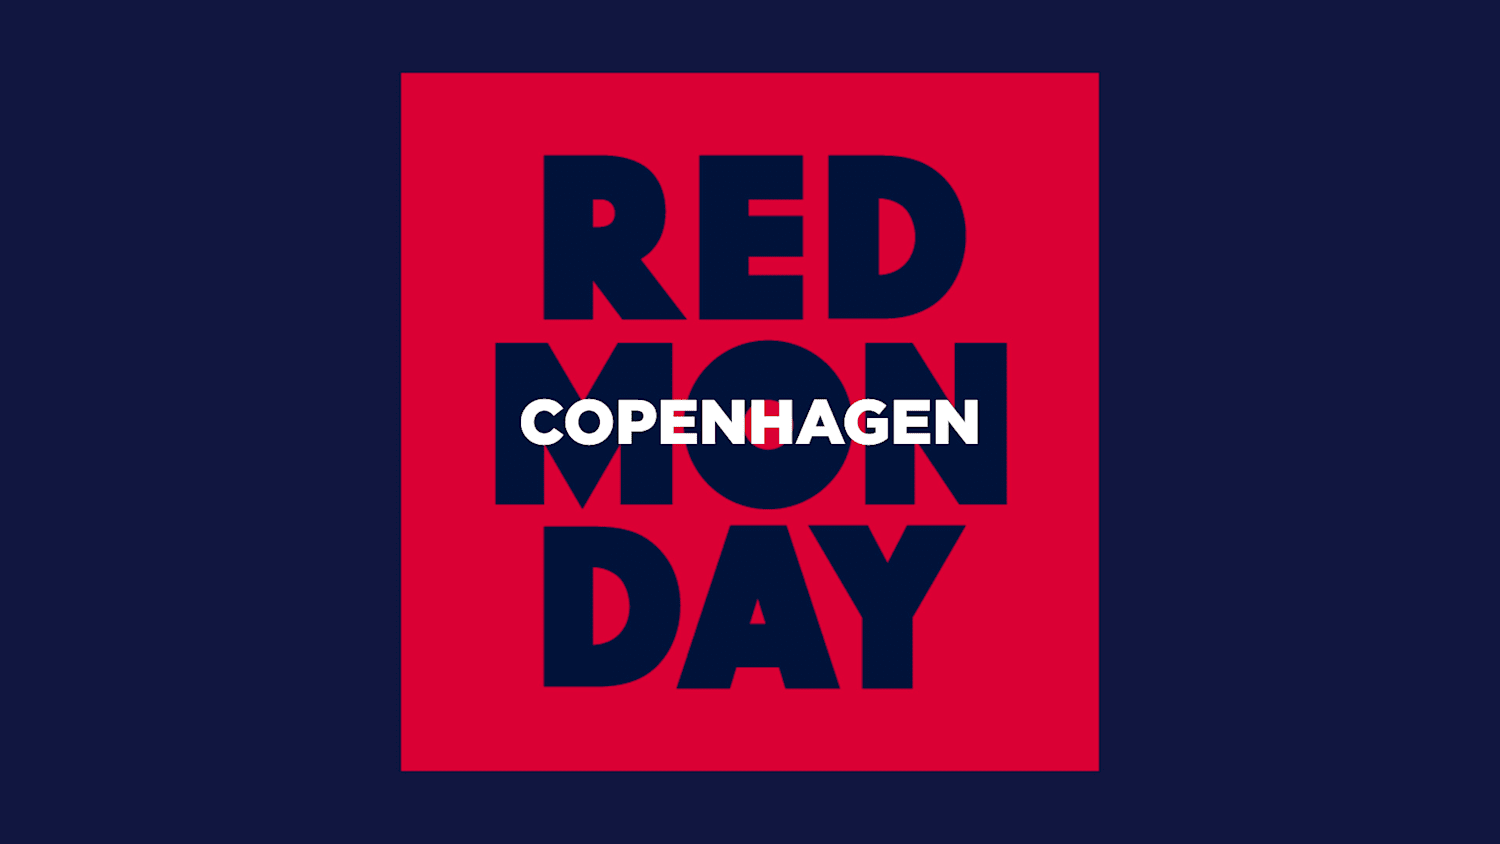 Red Monday is to Copenhagen